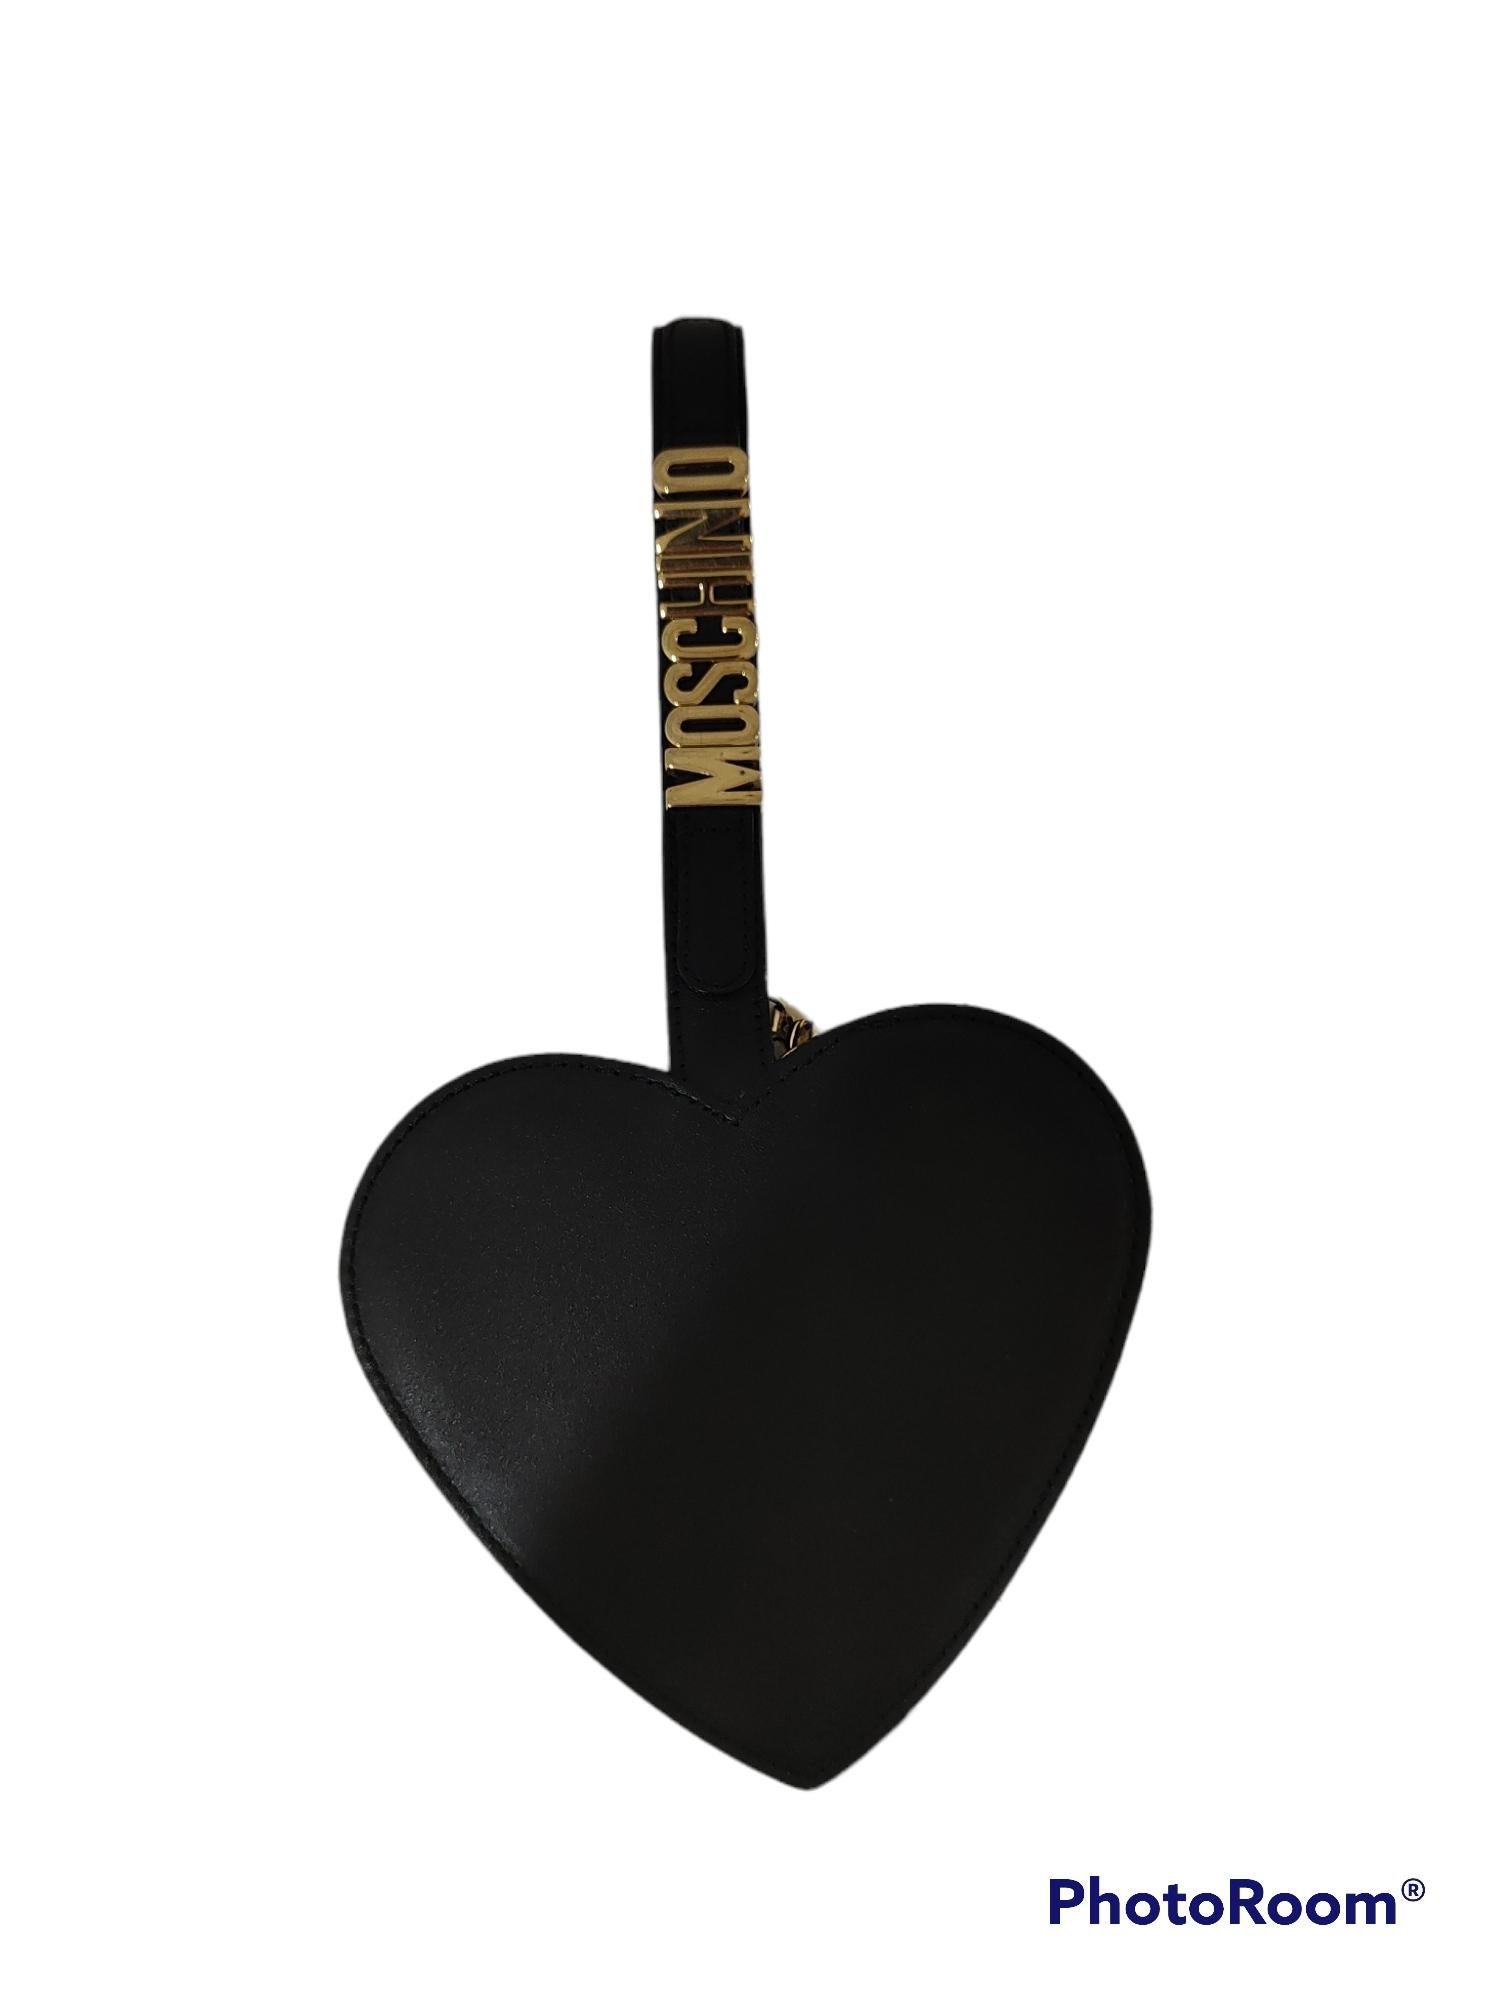 Moschino black leather heart Handbag
measurements: 16*14 cm, 4 cm depth